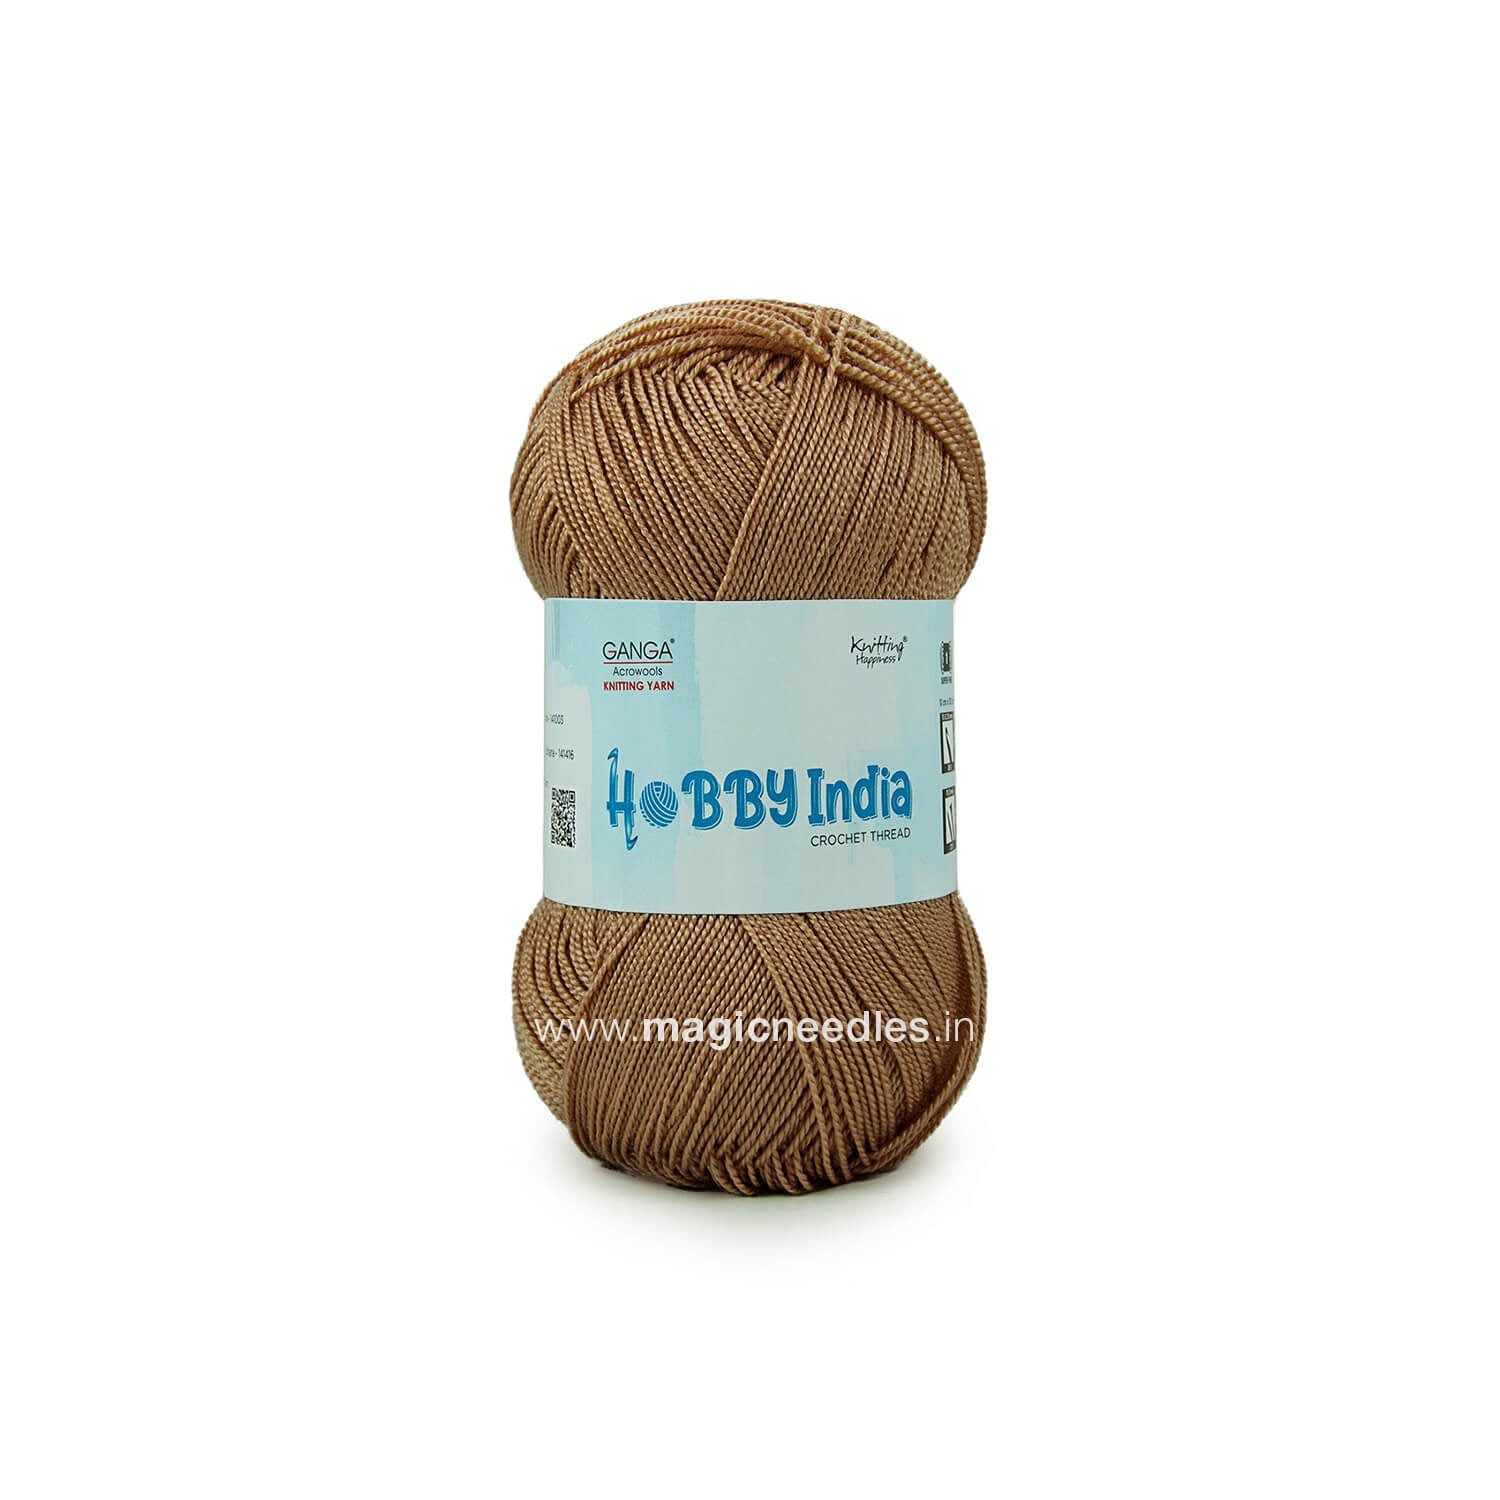 Ganga Hobby India Crochet Thread - Brown 79